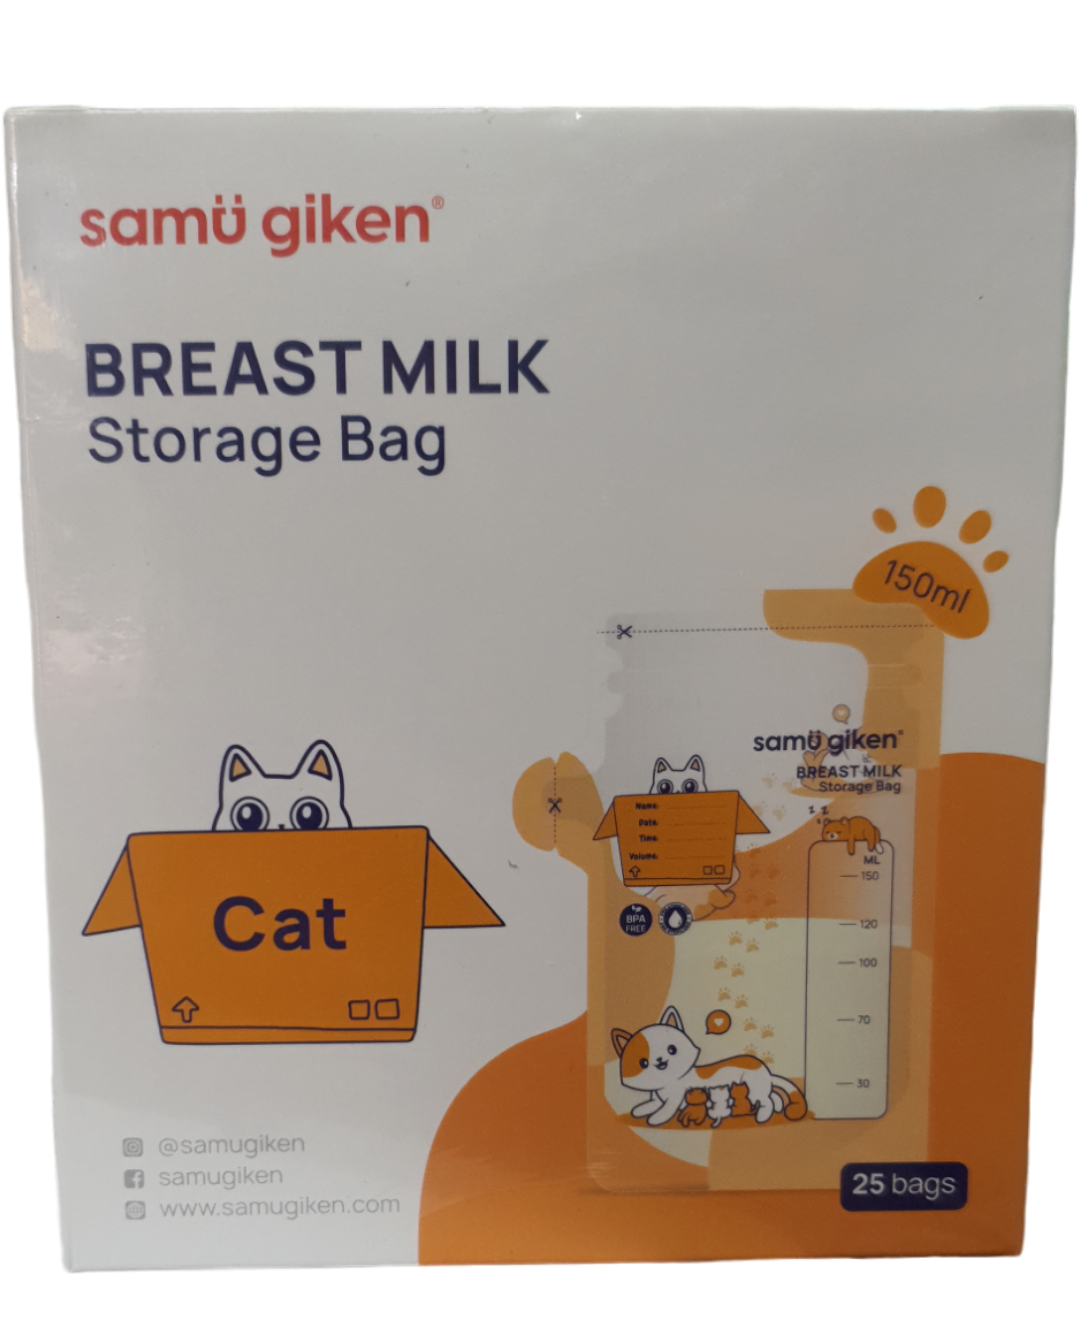 Samu Giken Breast Milk Storage Bag 25's 150ml